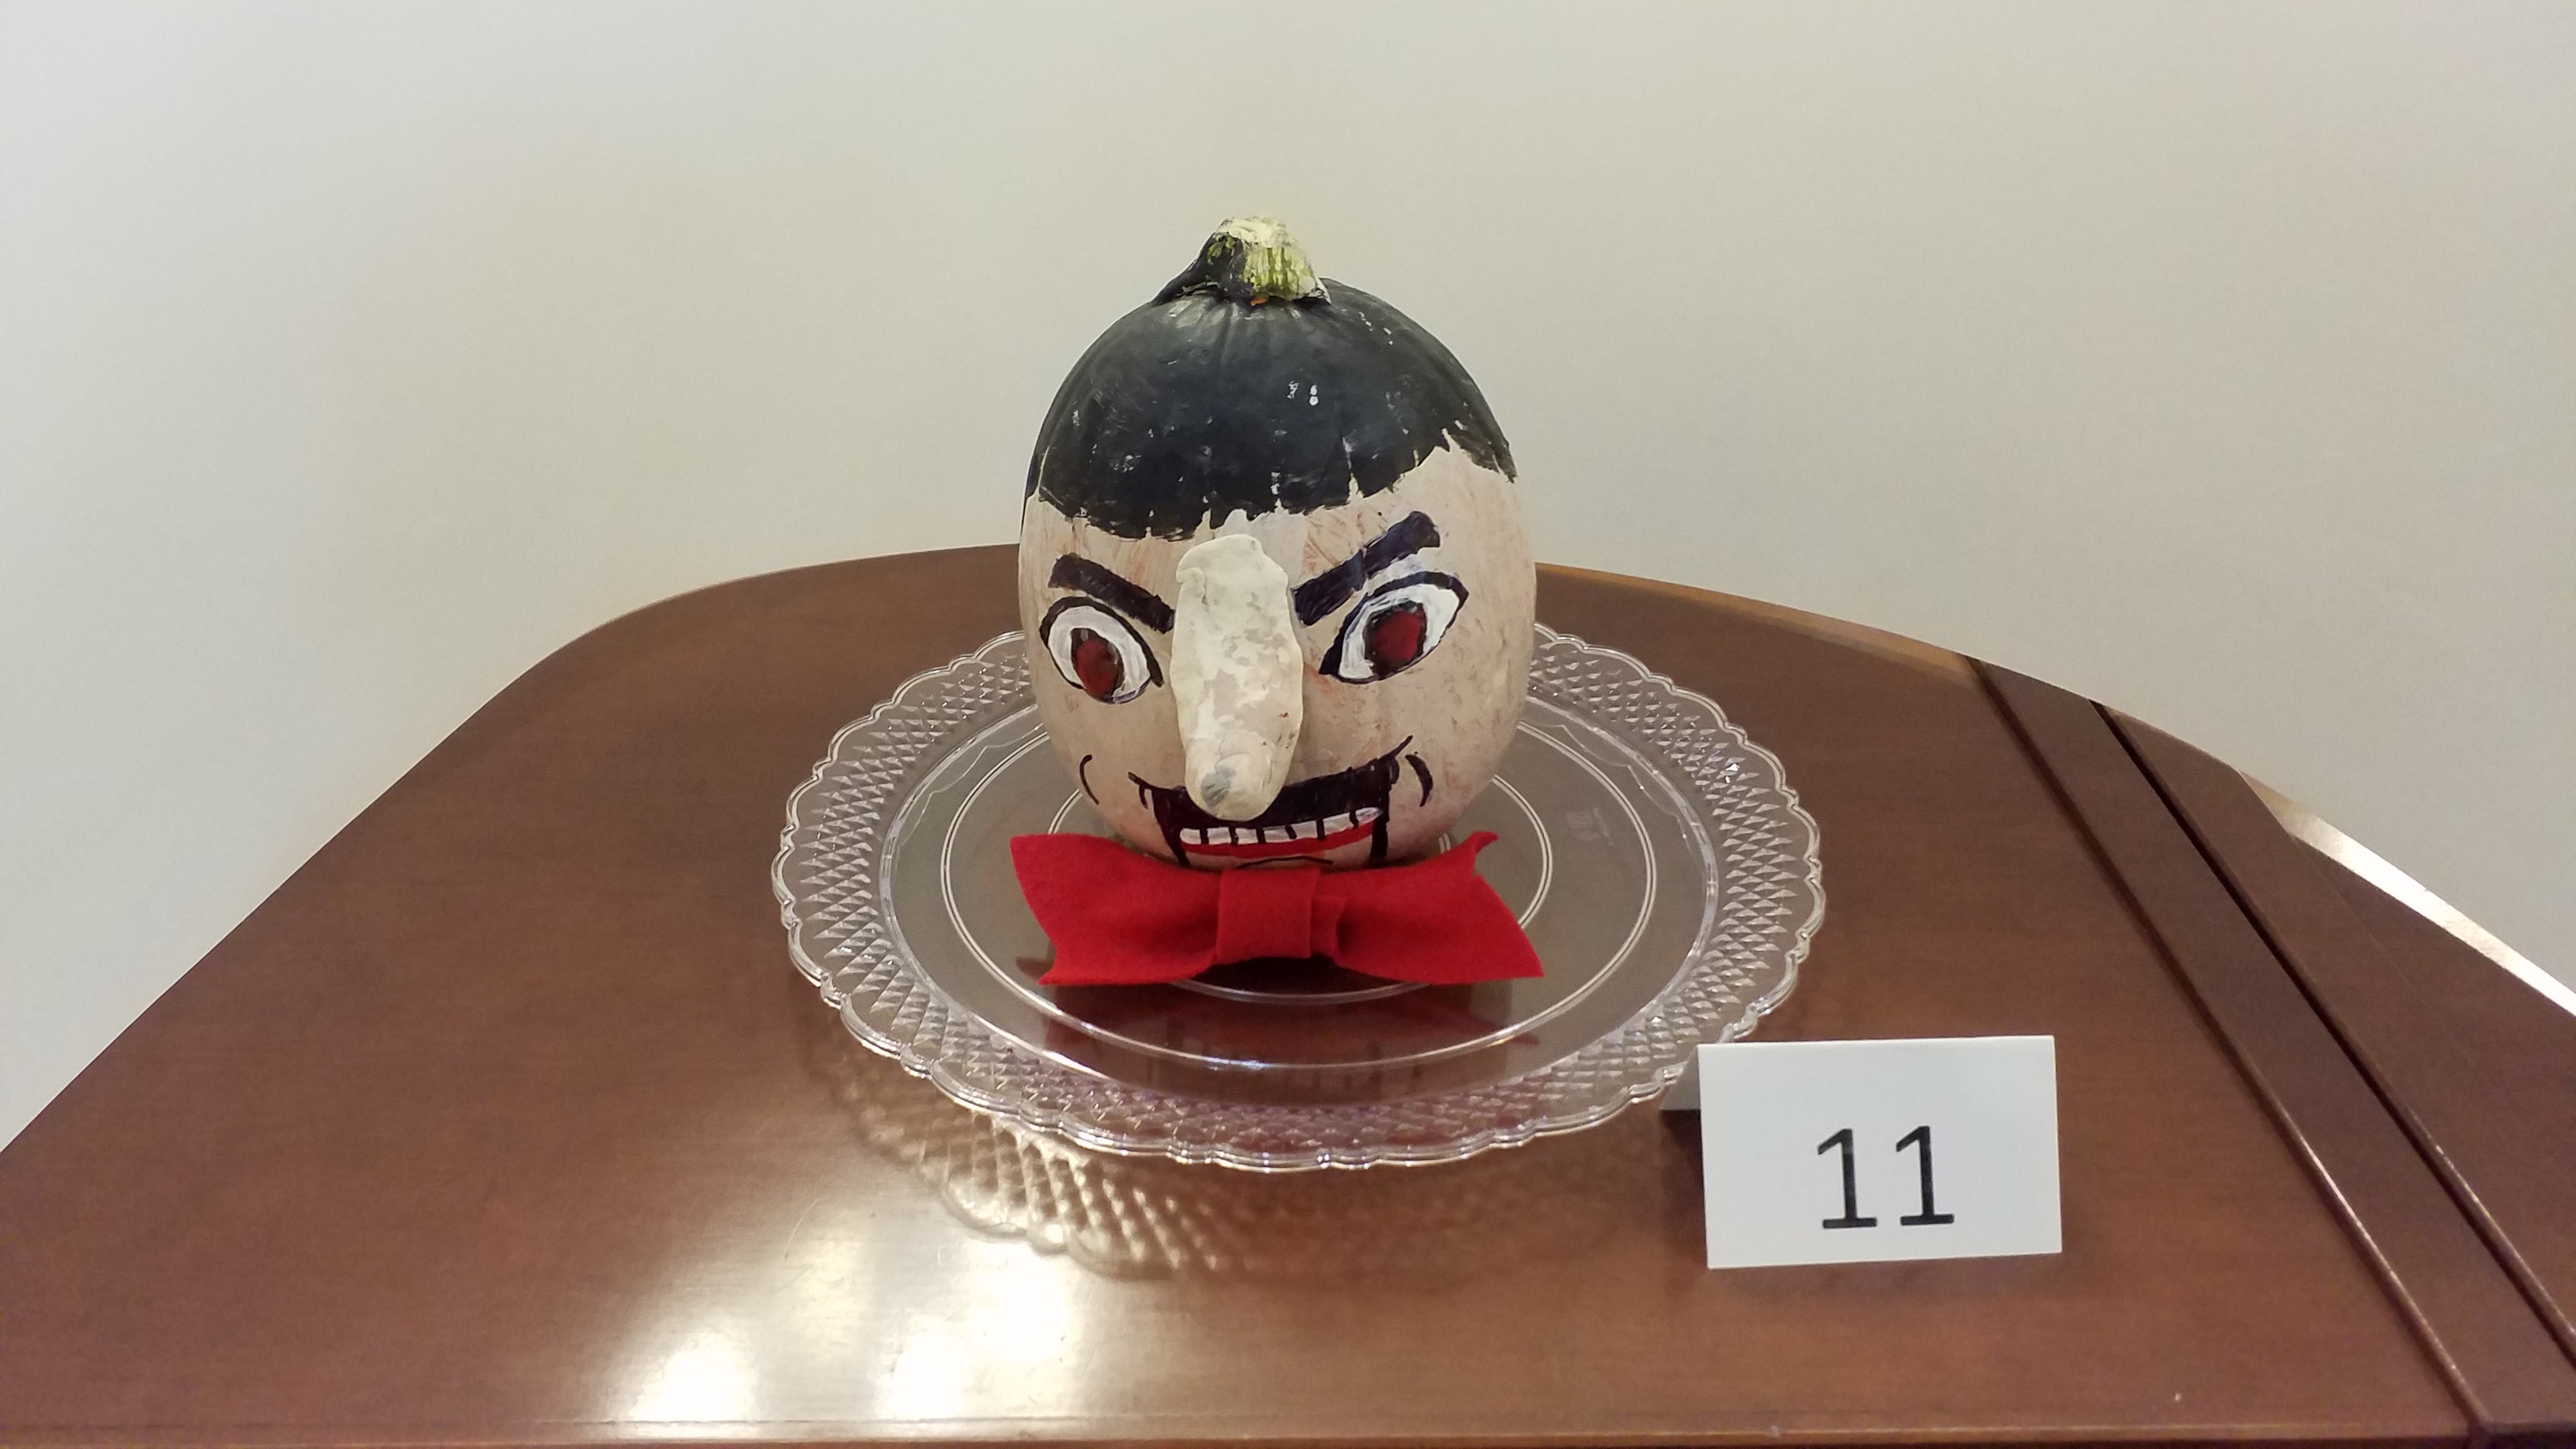 Pumpkin decorated as haunted ventriloquist dummy